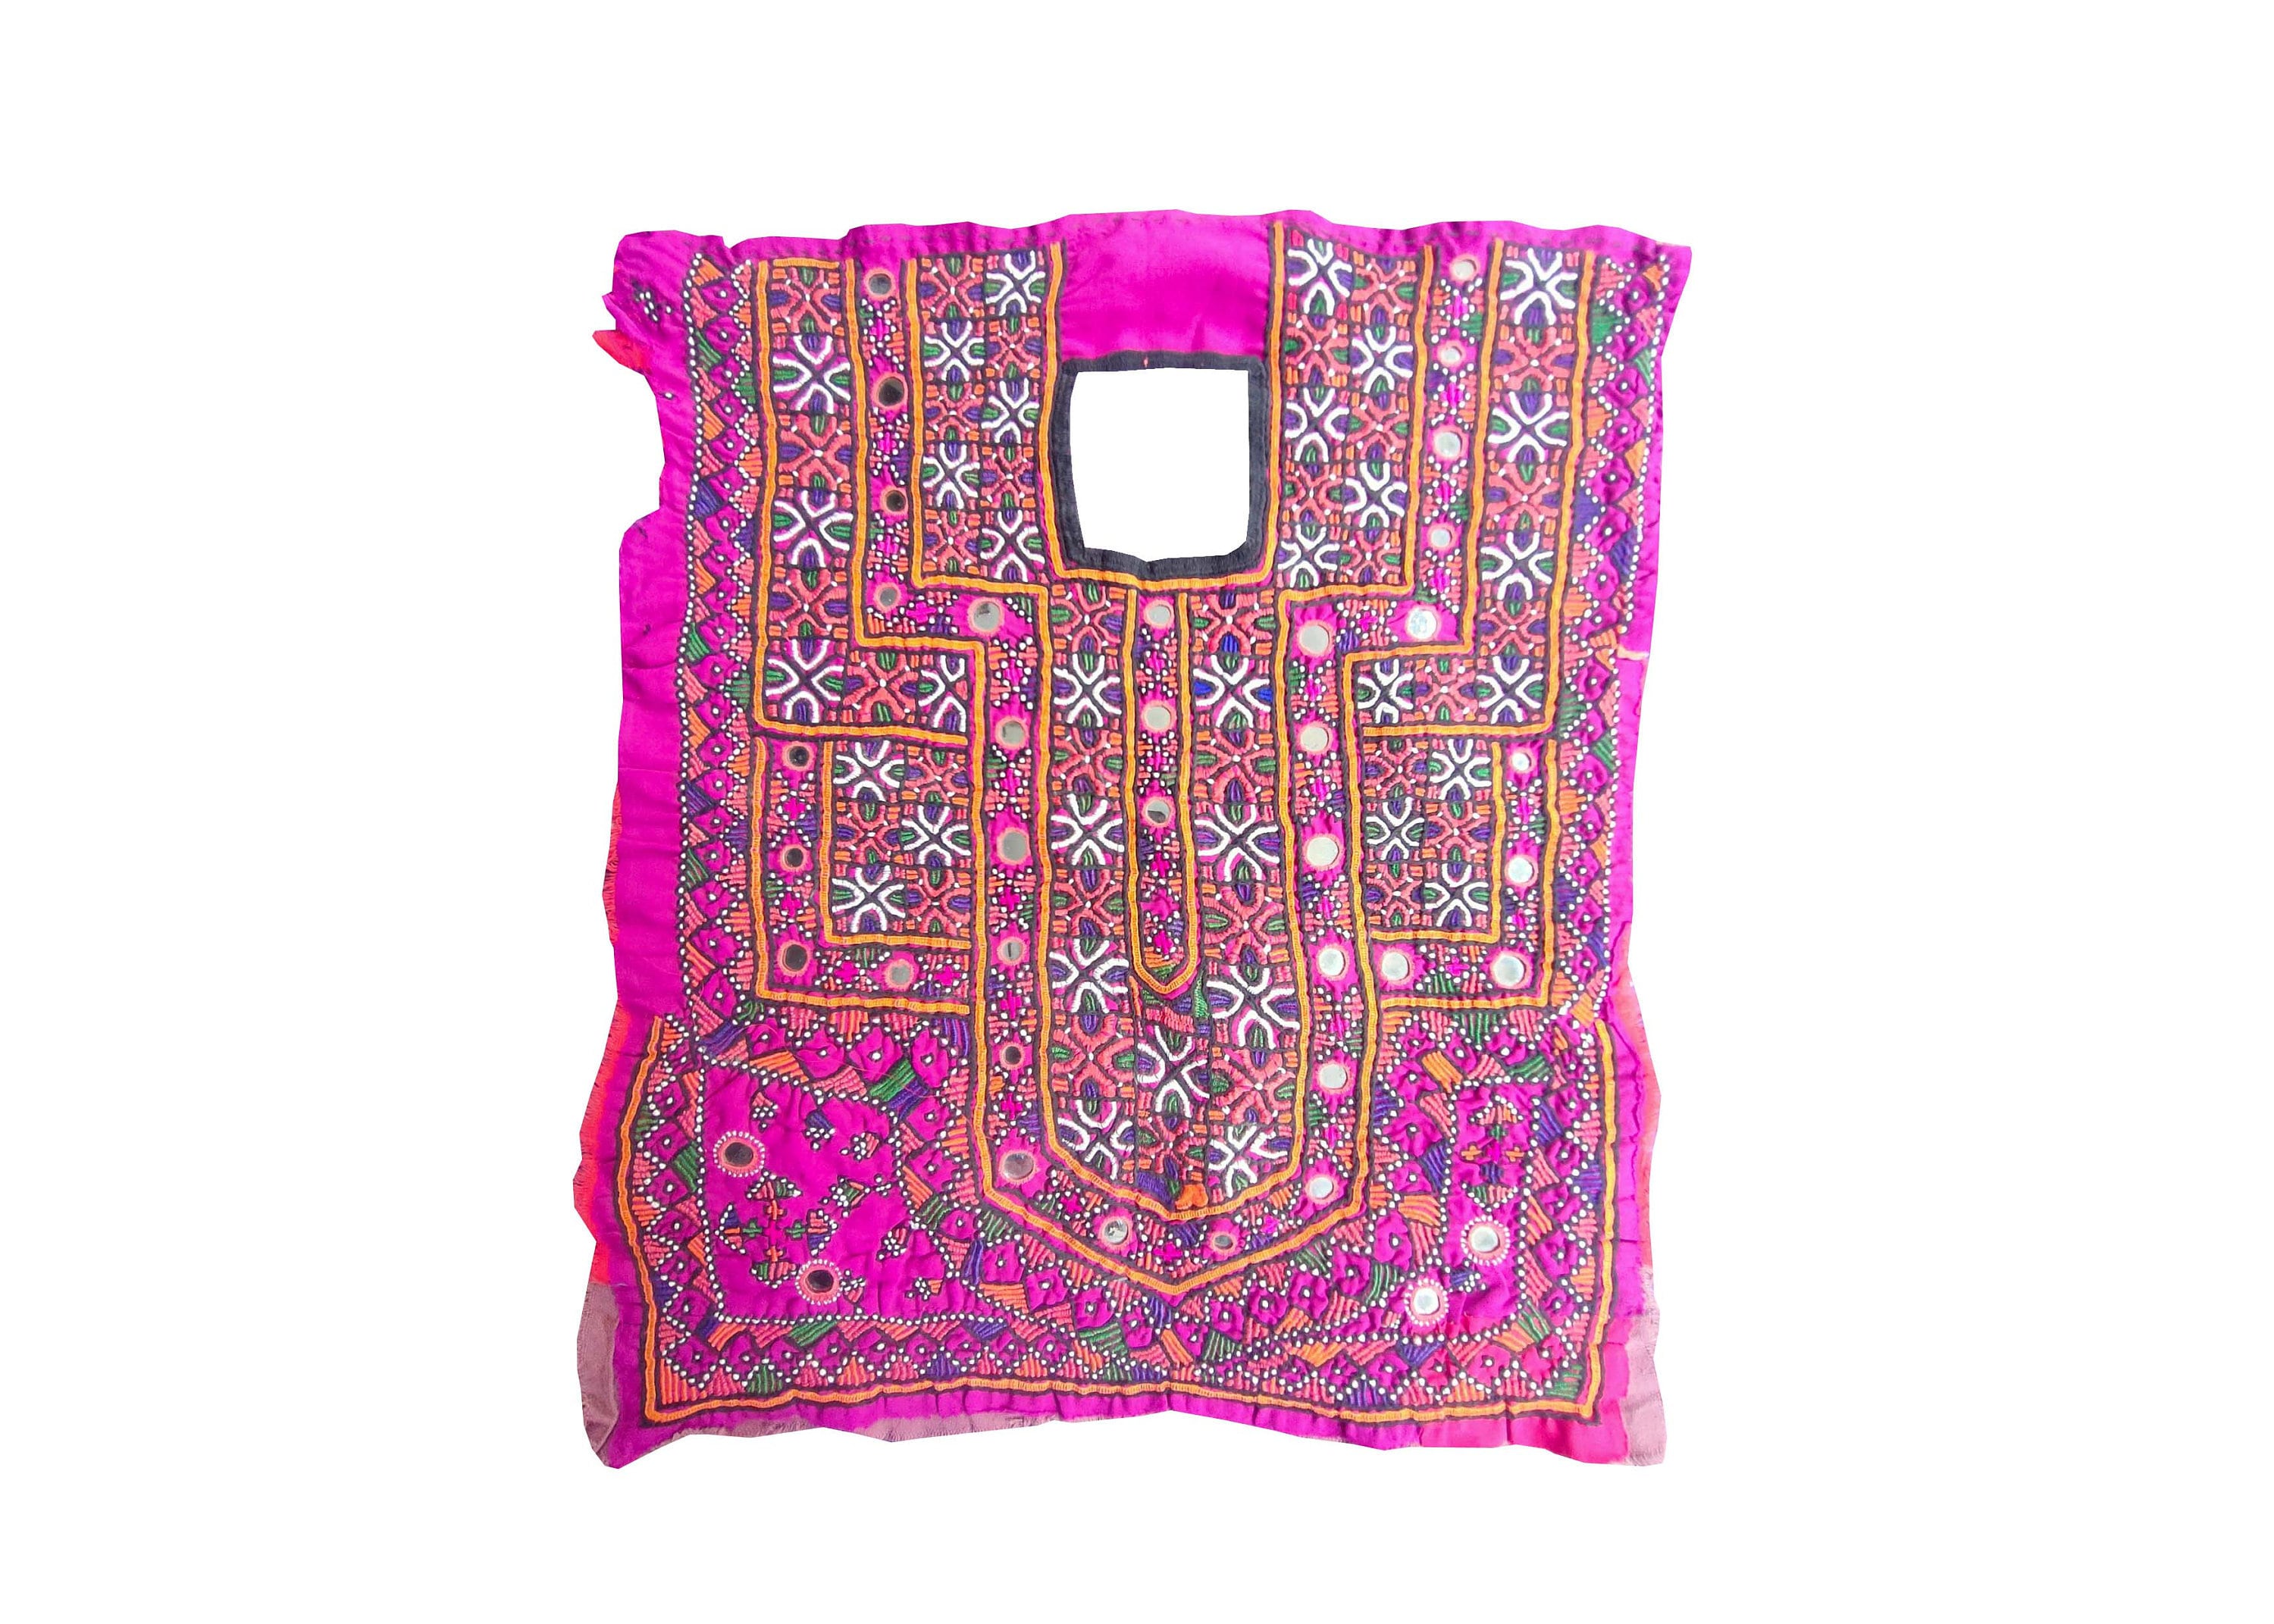 Upcycled Recycled Kutchi Sindhi Afghan Tribal Embroidery Applique Vintage Boho Banjara Yoke Neckline,Handmade Indian Embroidered Neck Patch